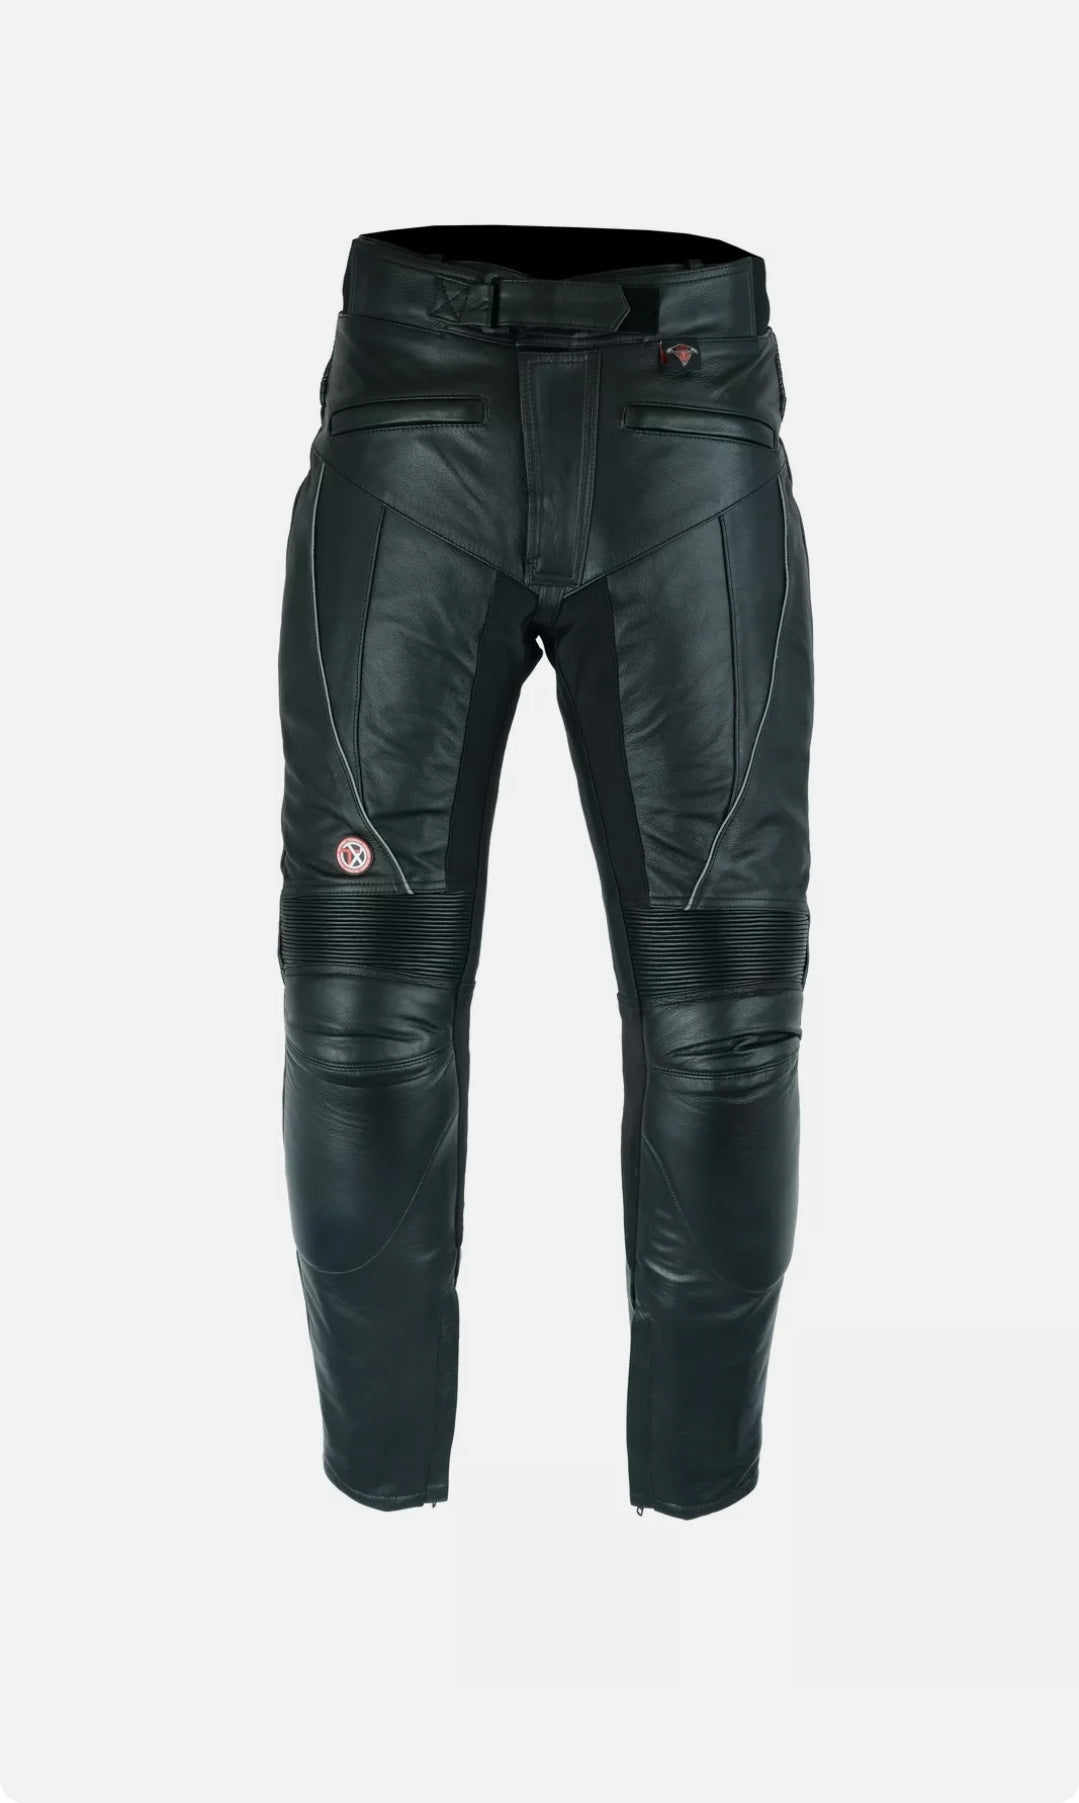 Waterproof Leather Pants, Leather Motorcycle Pants